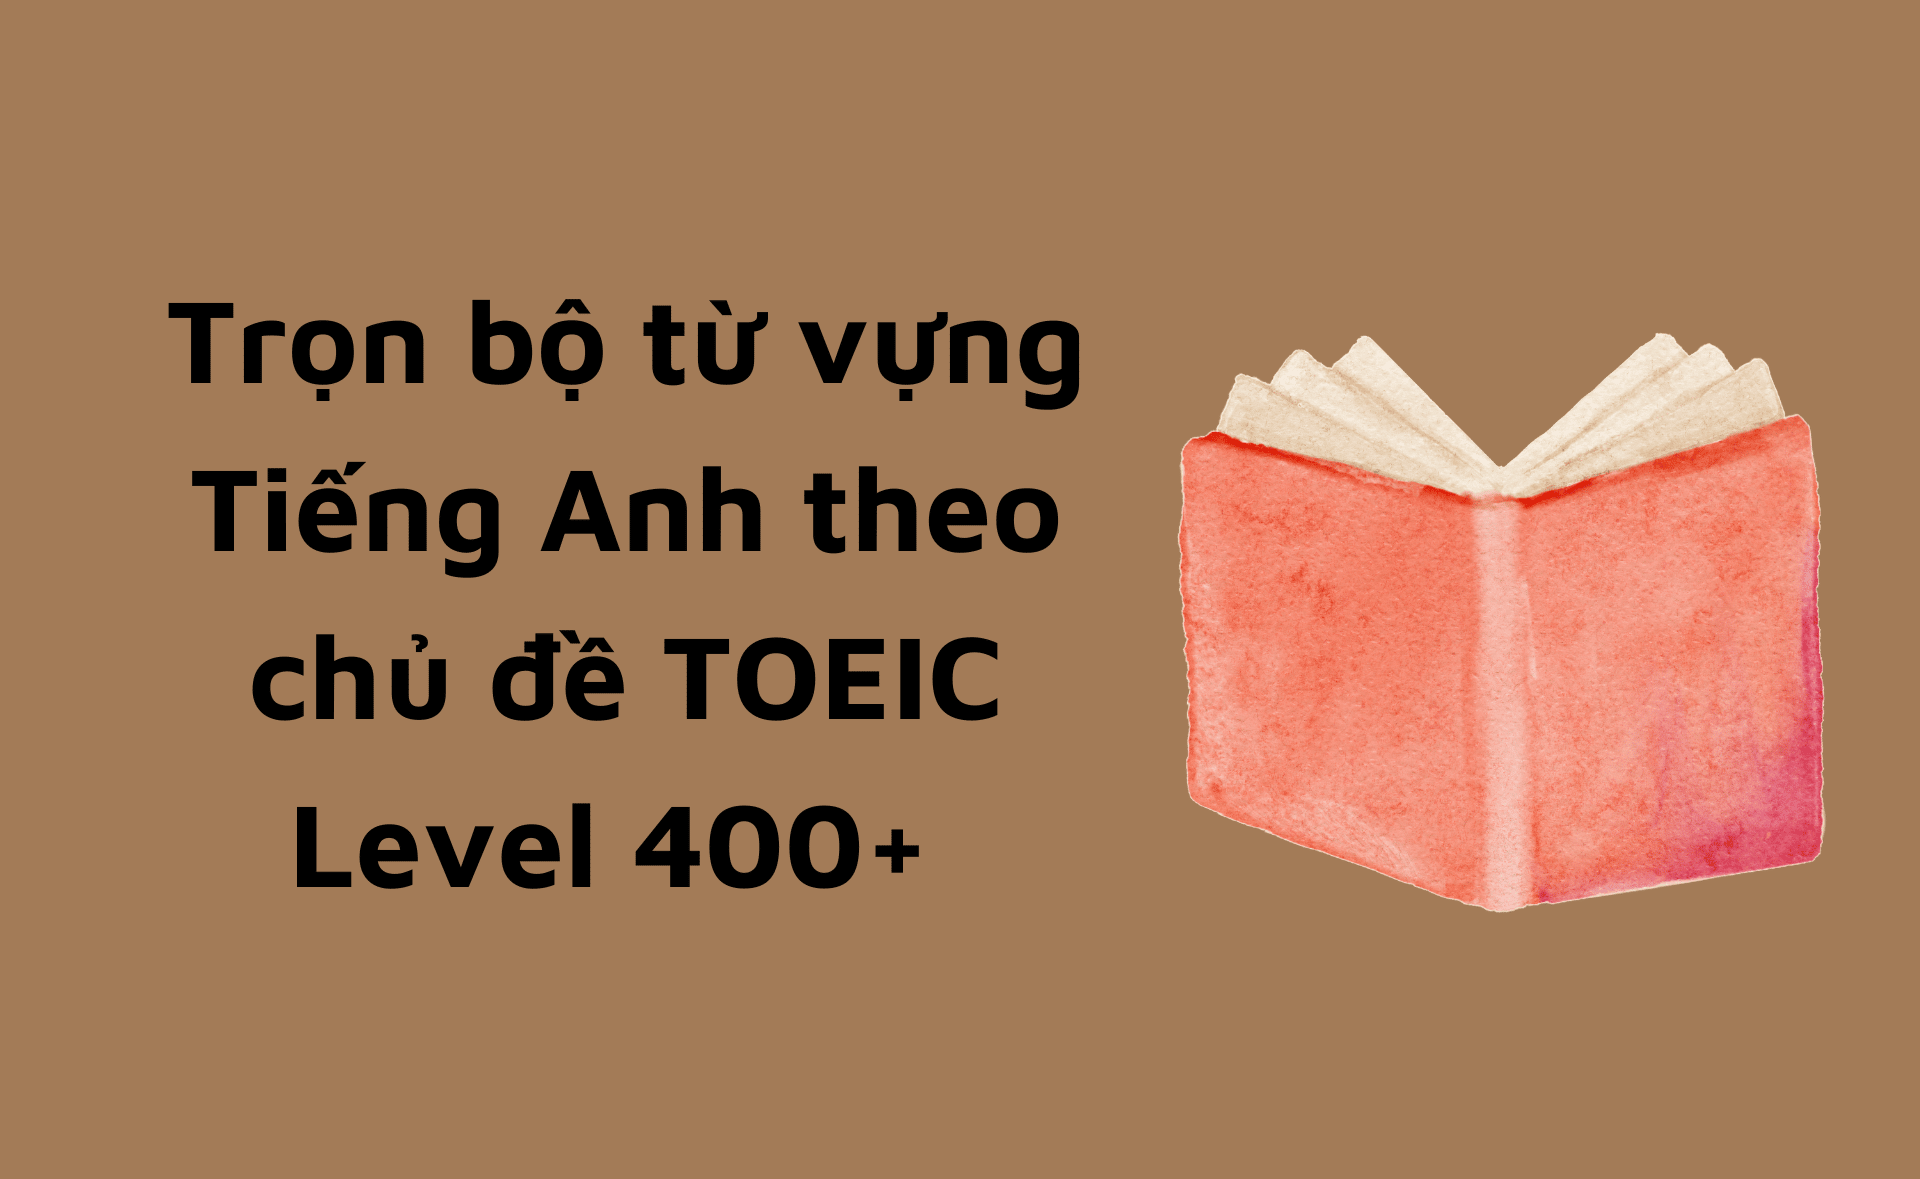 TOEIC Level 400+